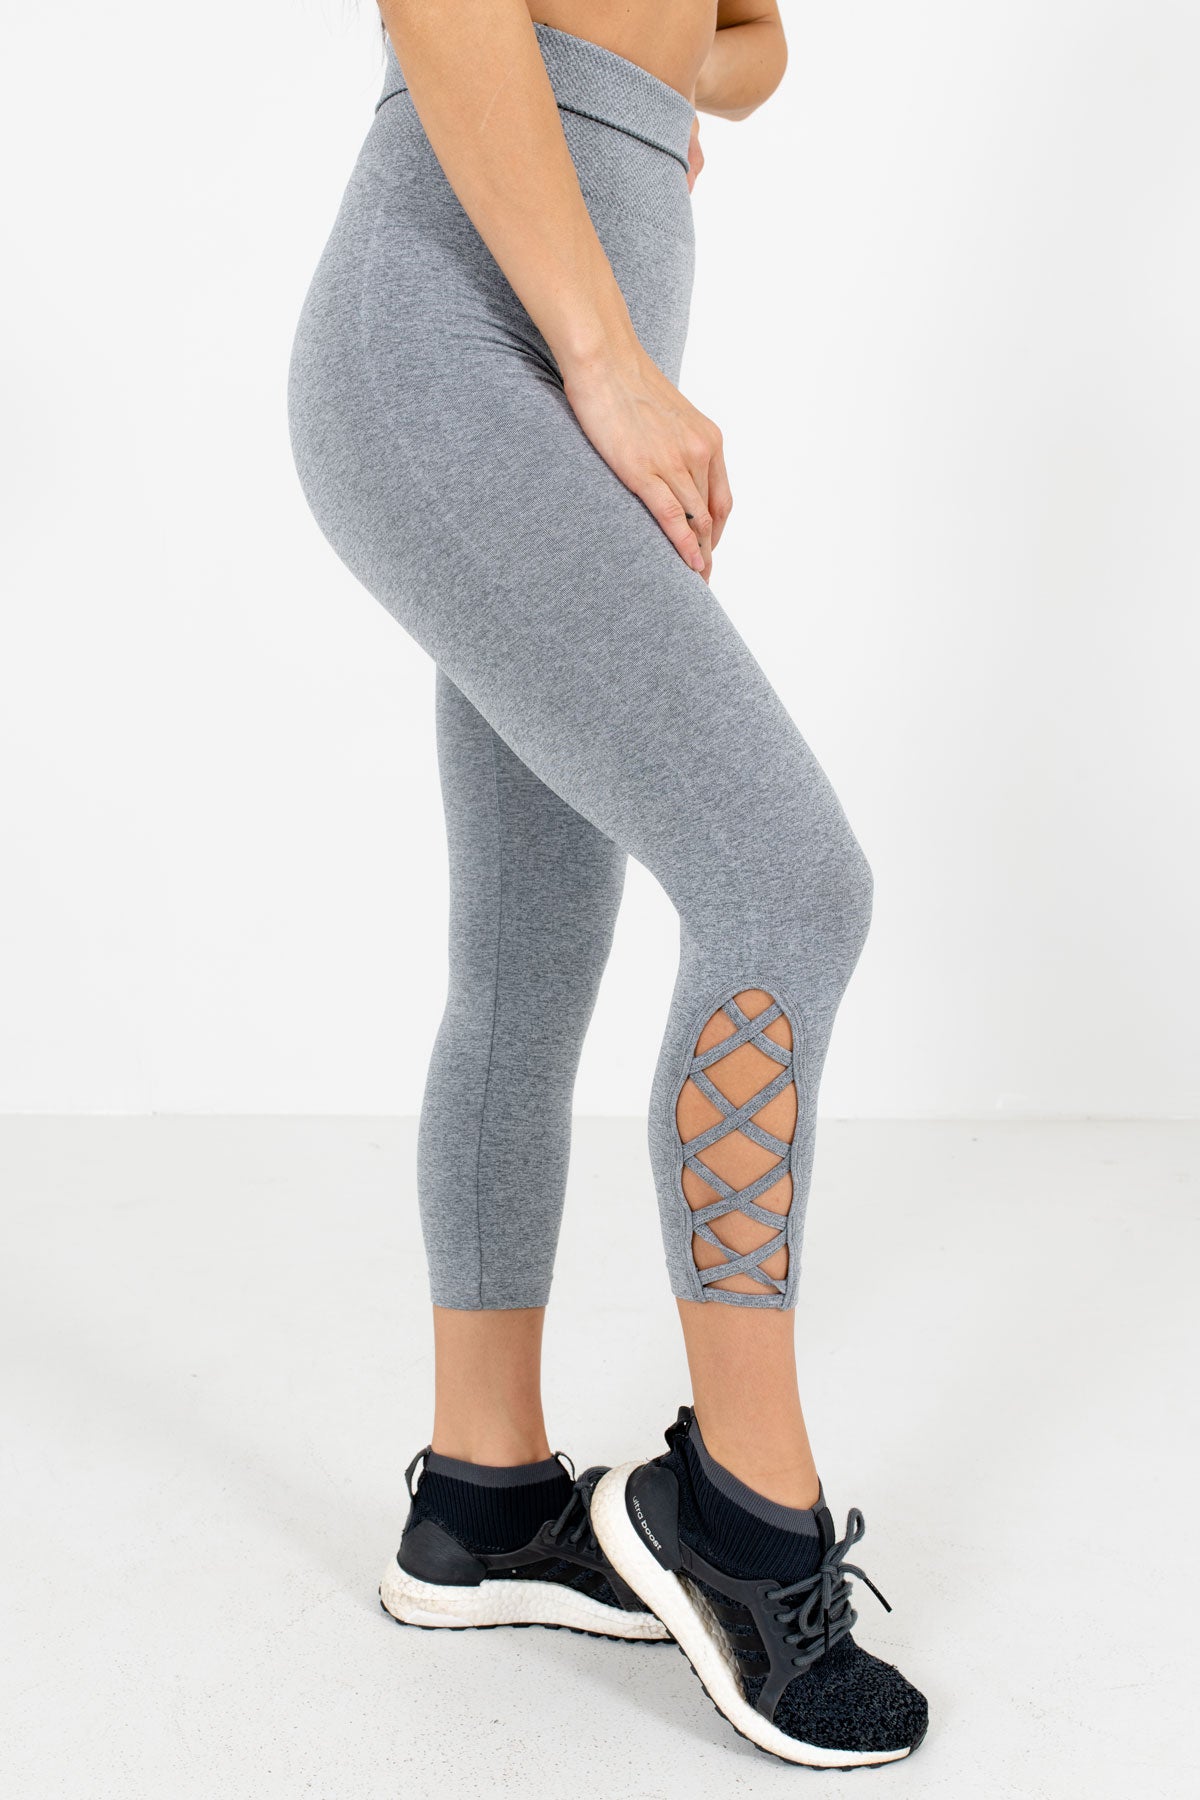 Ash Grey Yoga Capri Leggings, Solid Color Mid-Calf Length Activewear For  Women-Made in USA/EU, Heidikimurart Limited